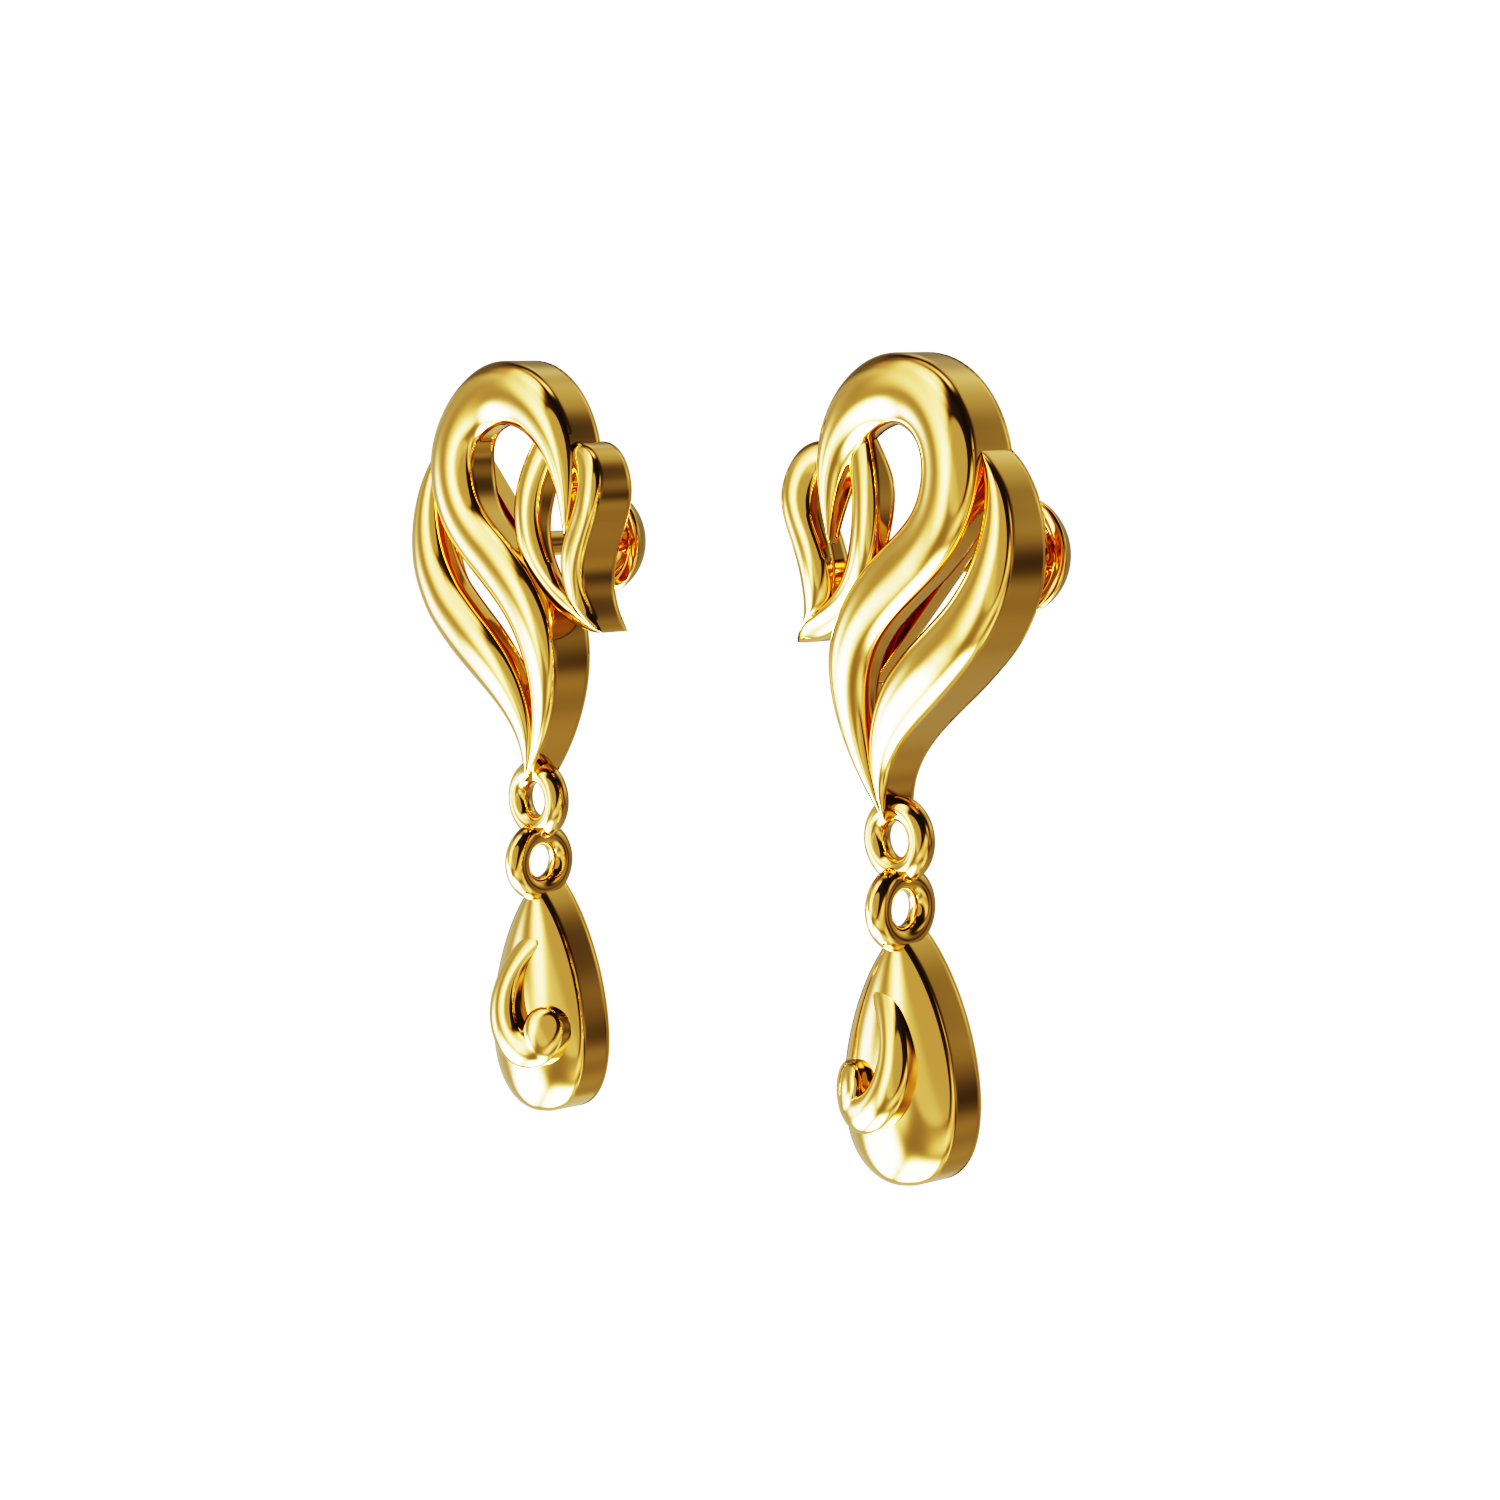 Buy OOMPHelicious Jewellery 18K Gold Tone Cubic Zirconia Office-Wear Fashion  Drop Earrings For Women & Girls at Amazon.in